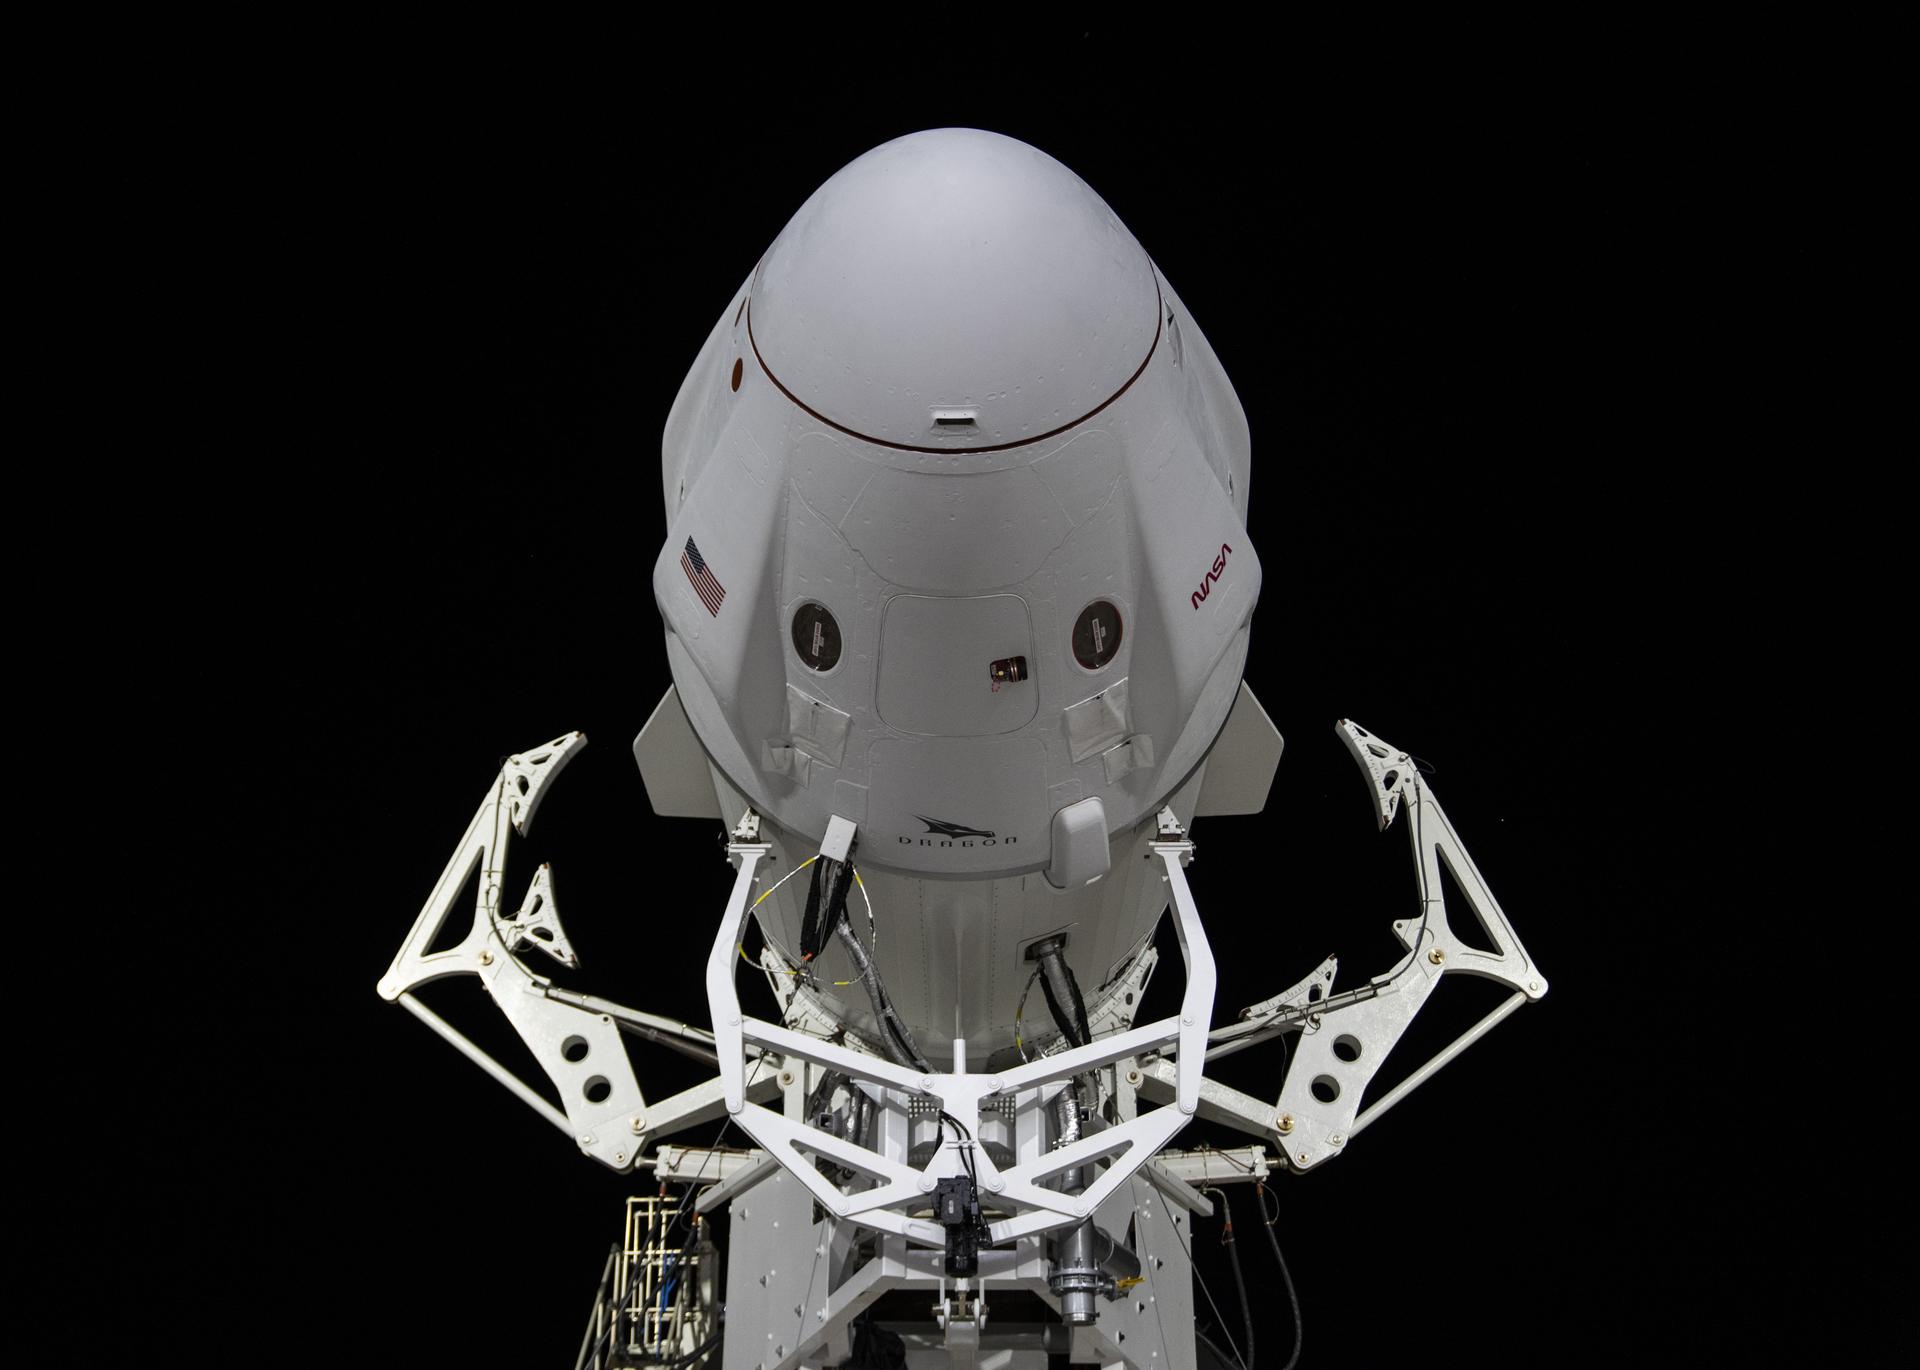 A spacex crew dragon capsule atop a Falcon 9 rocket